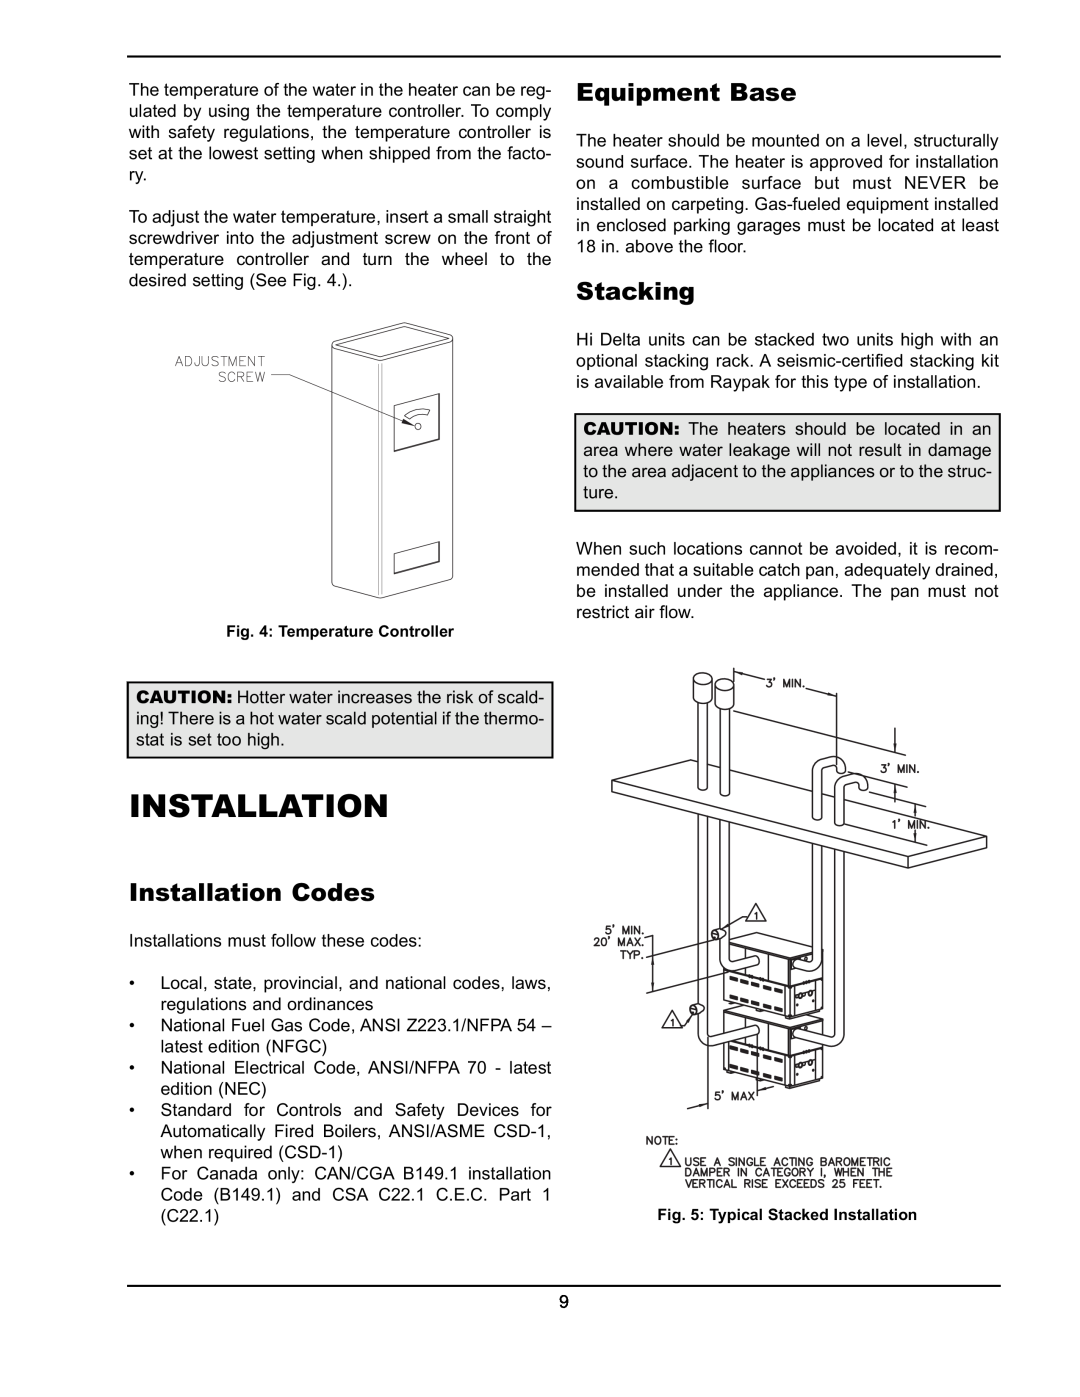 Raypak 302A-902A manual Equipment Base, Stacking, Installation Codes 